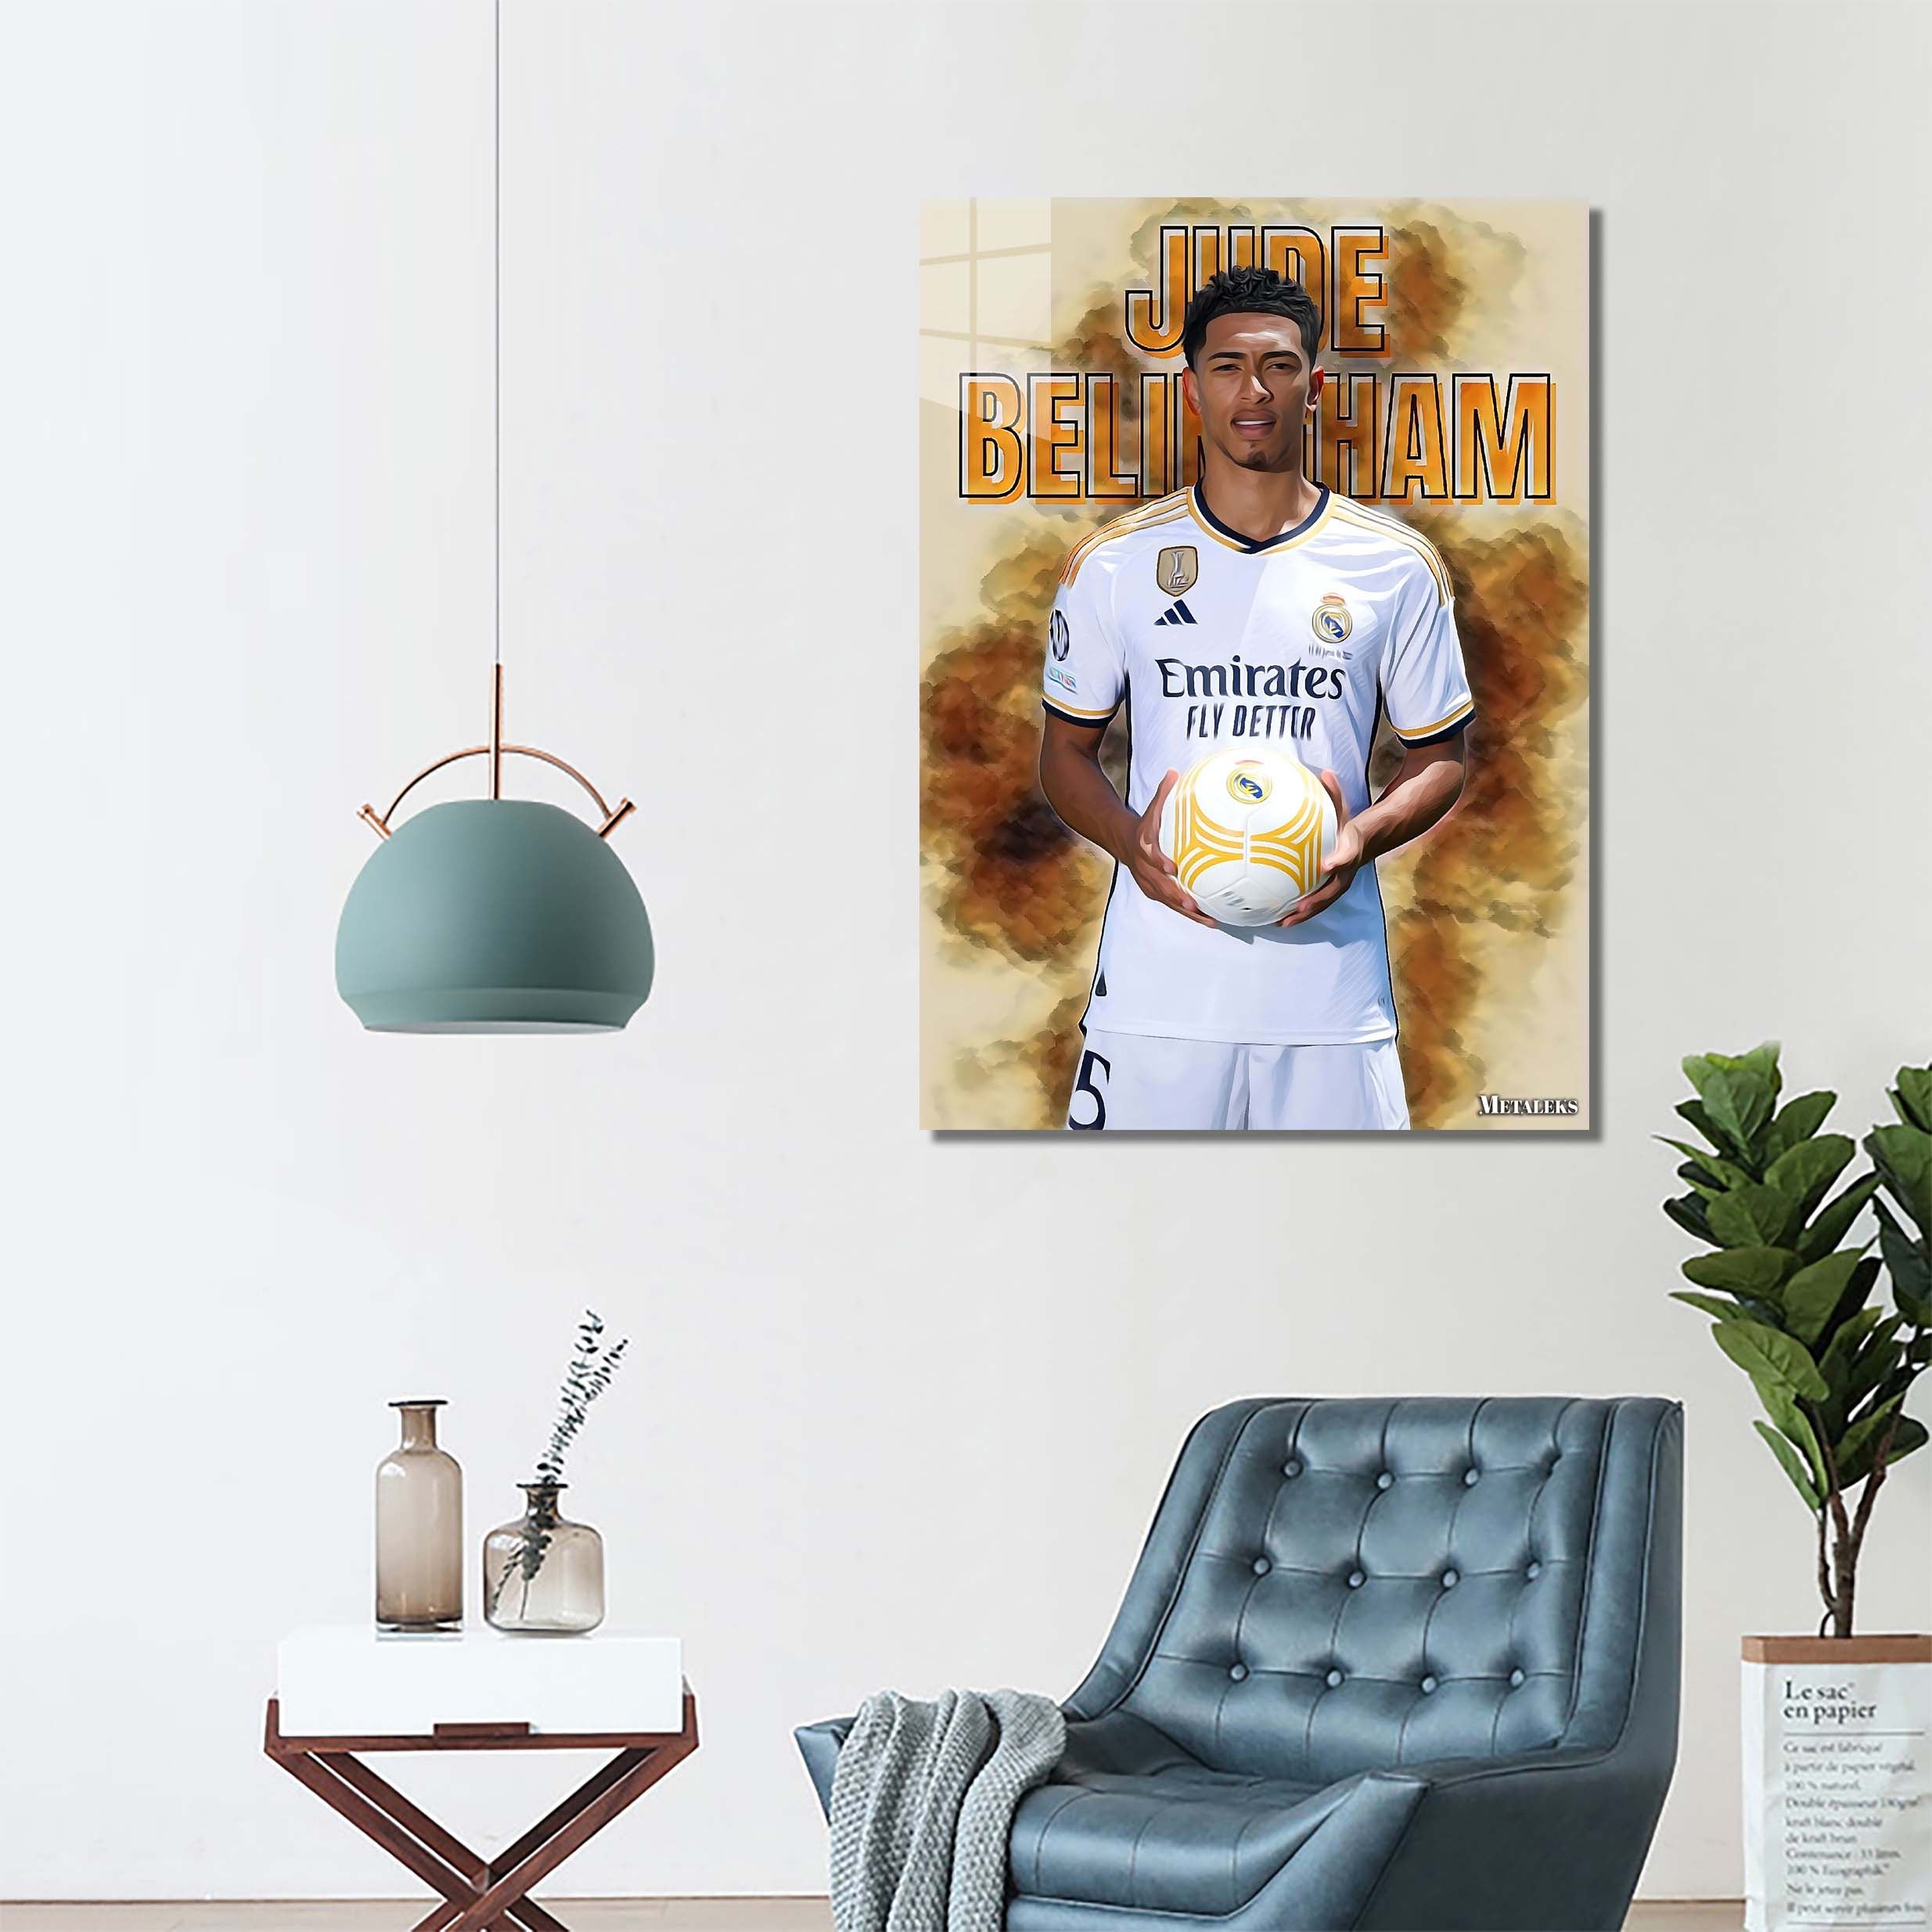 Jude Real Madrid-designed by @Wijaki Thaisusuken